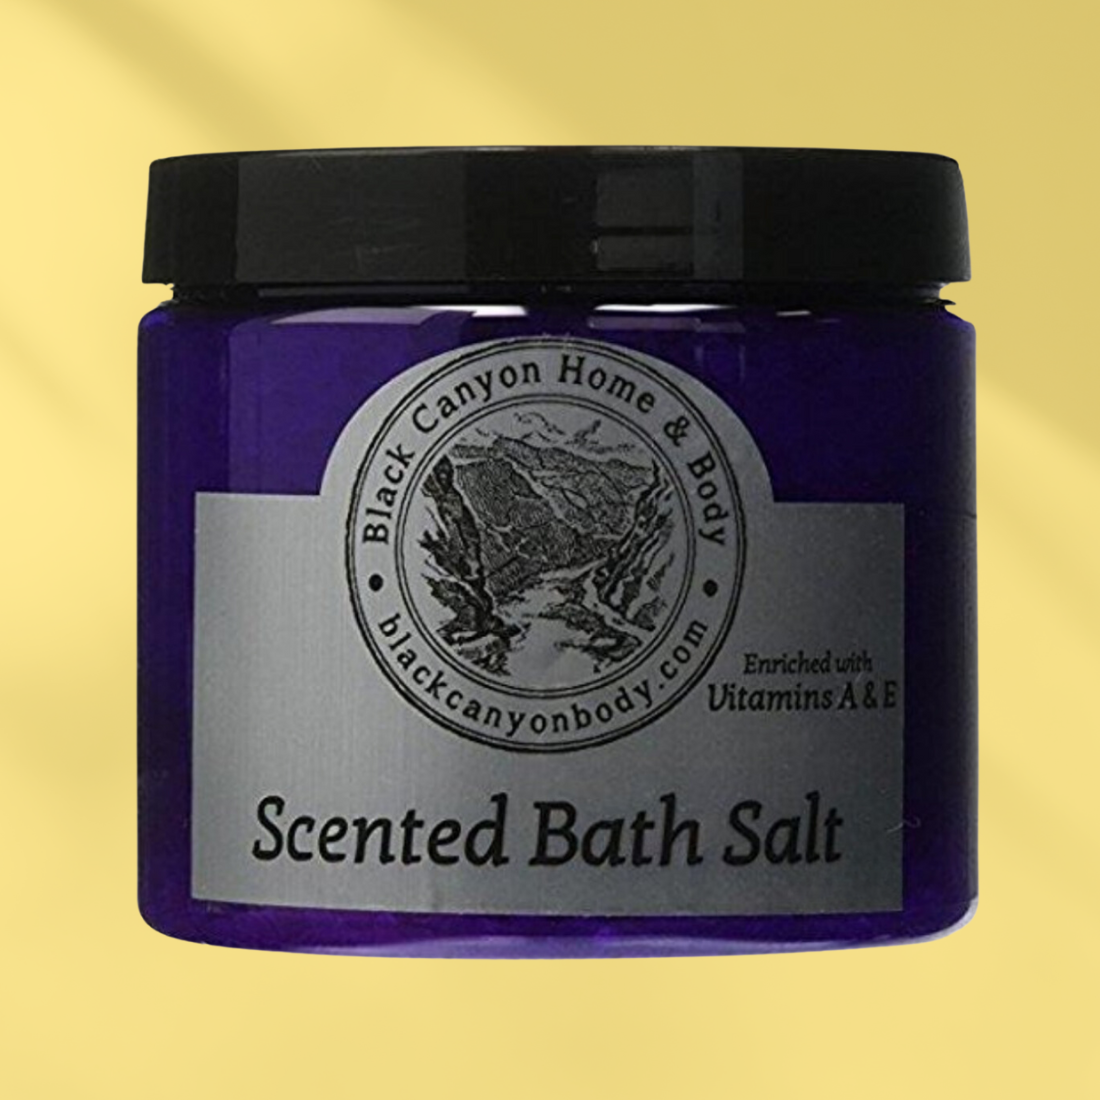 Black Canyon Arizona Scented Epsom Salt Bath Soak